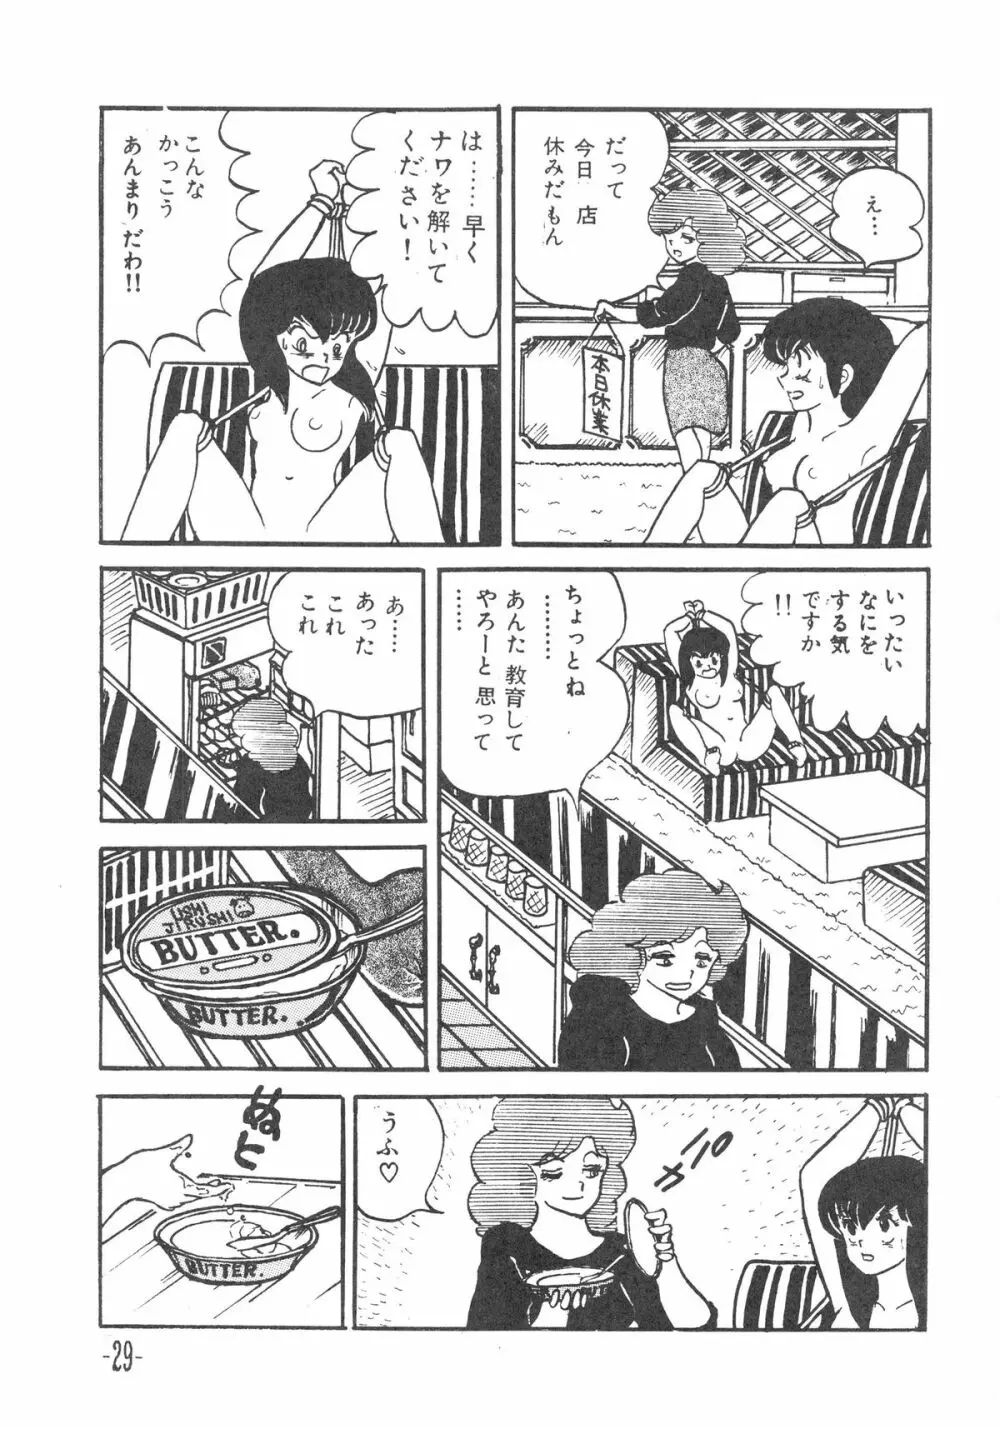 MIBOJIN GESHUKU 1 & 2 29ページ